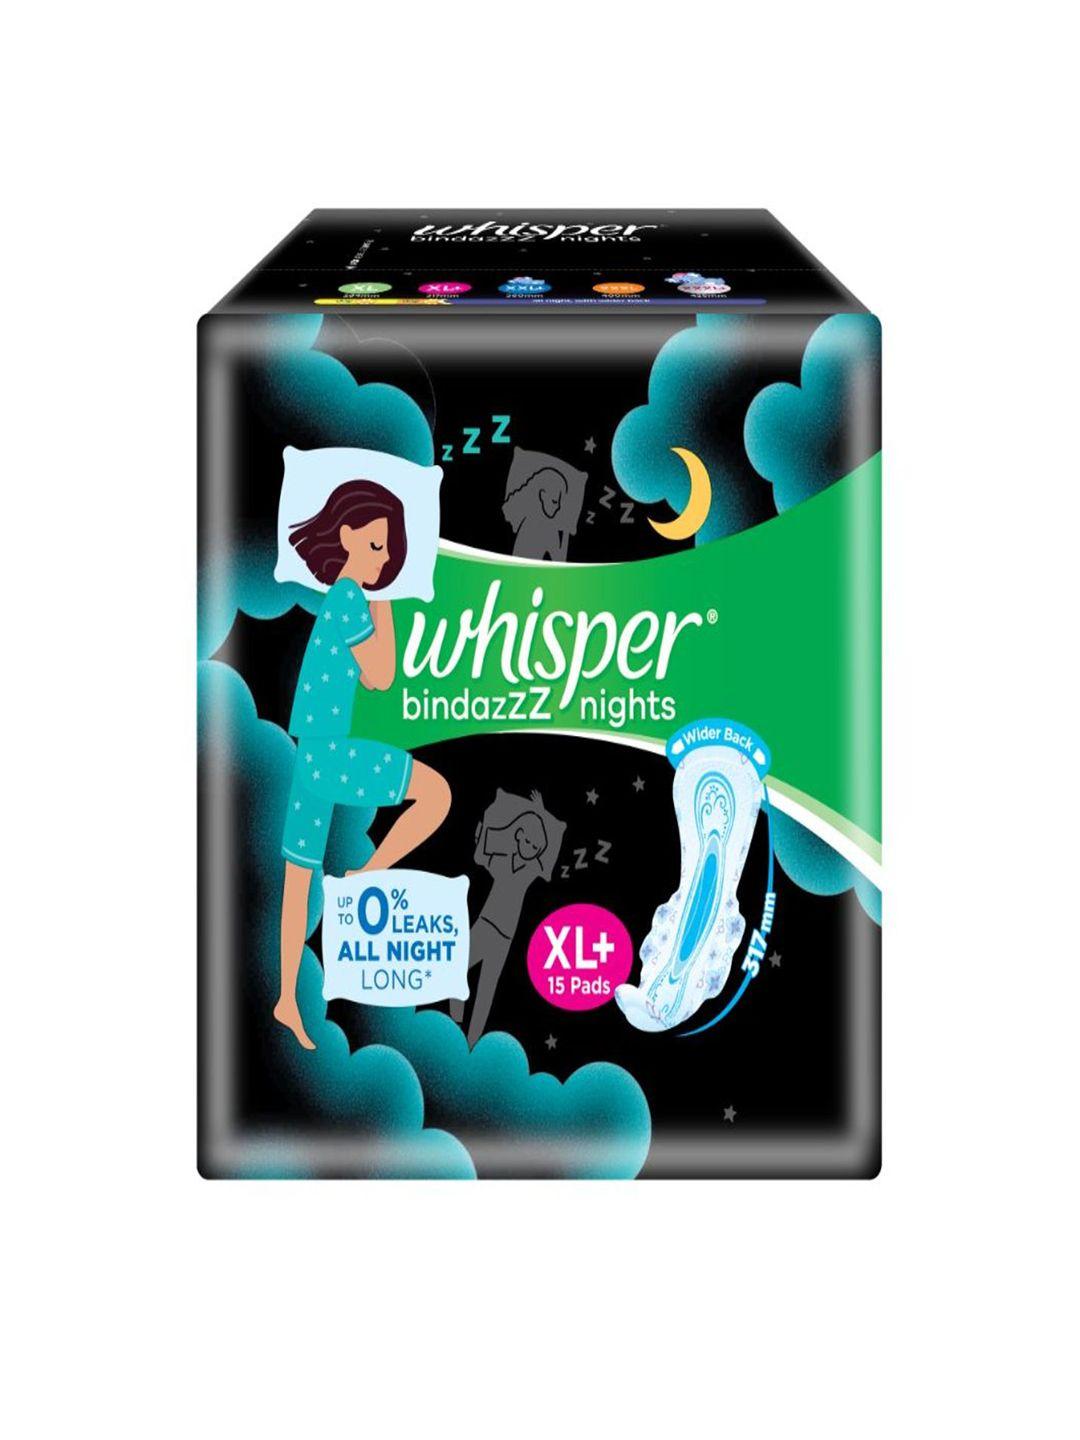 whisper bindazz nights xl+ sanitary pads - 15 pads